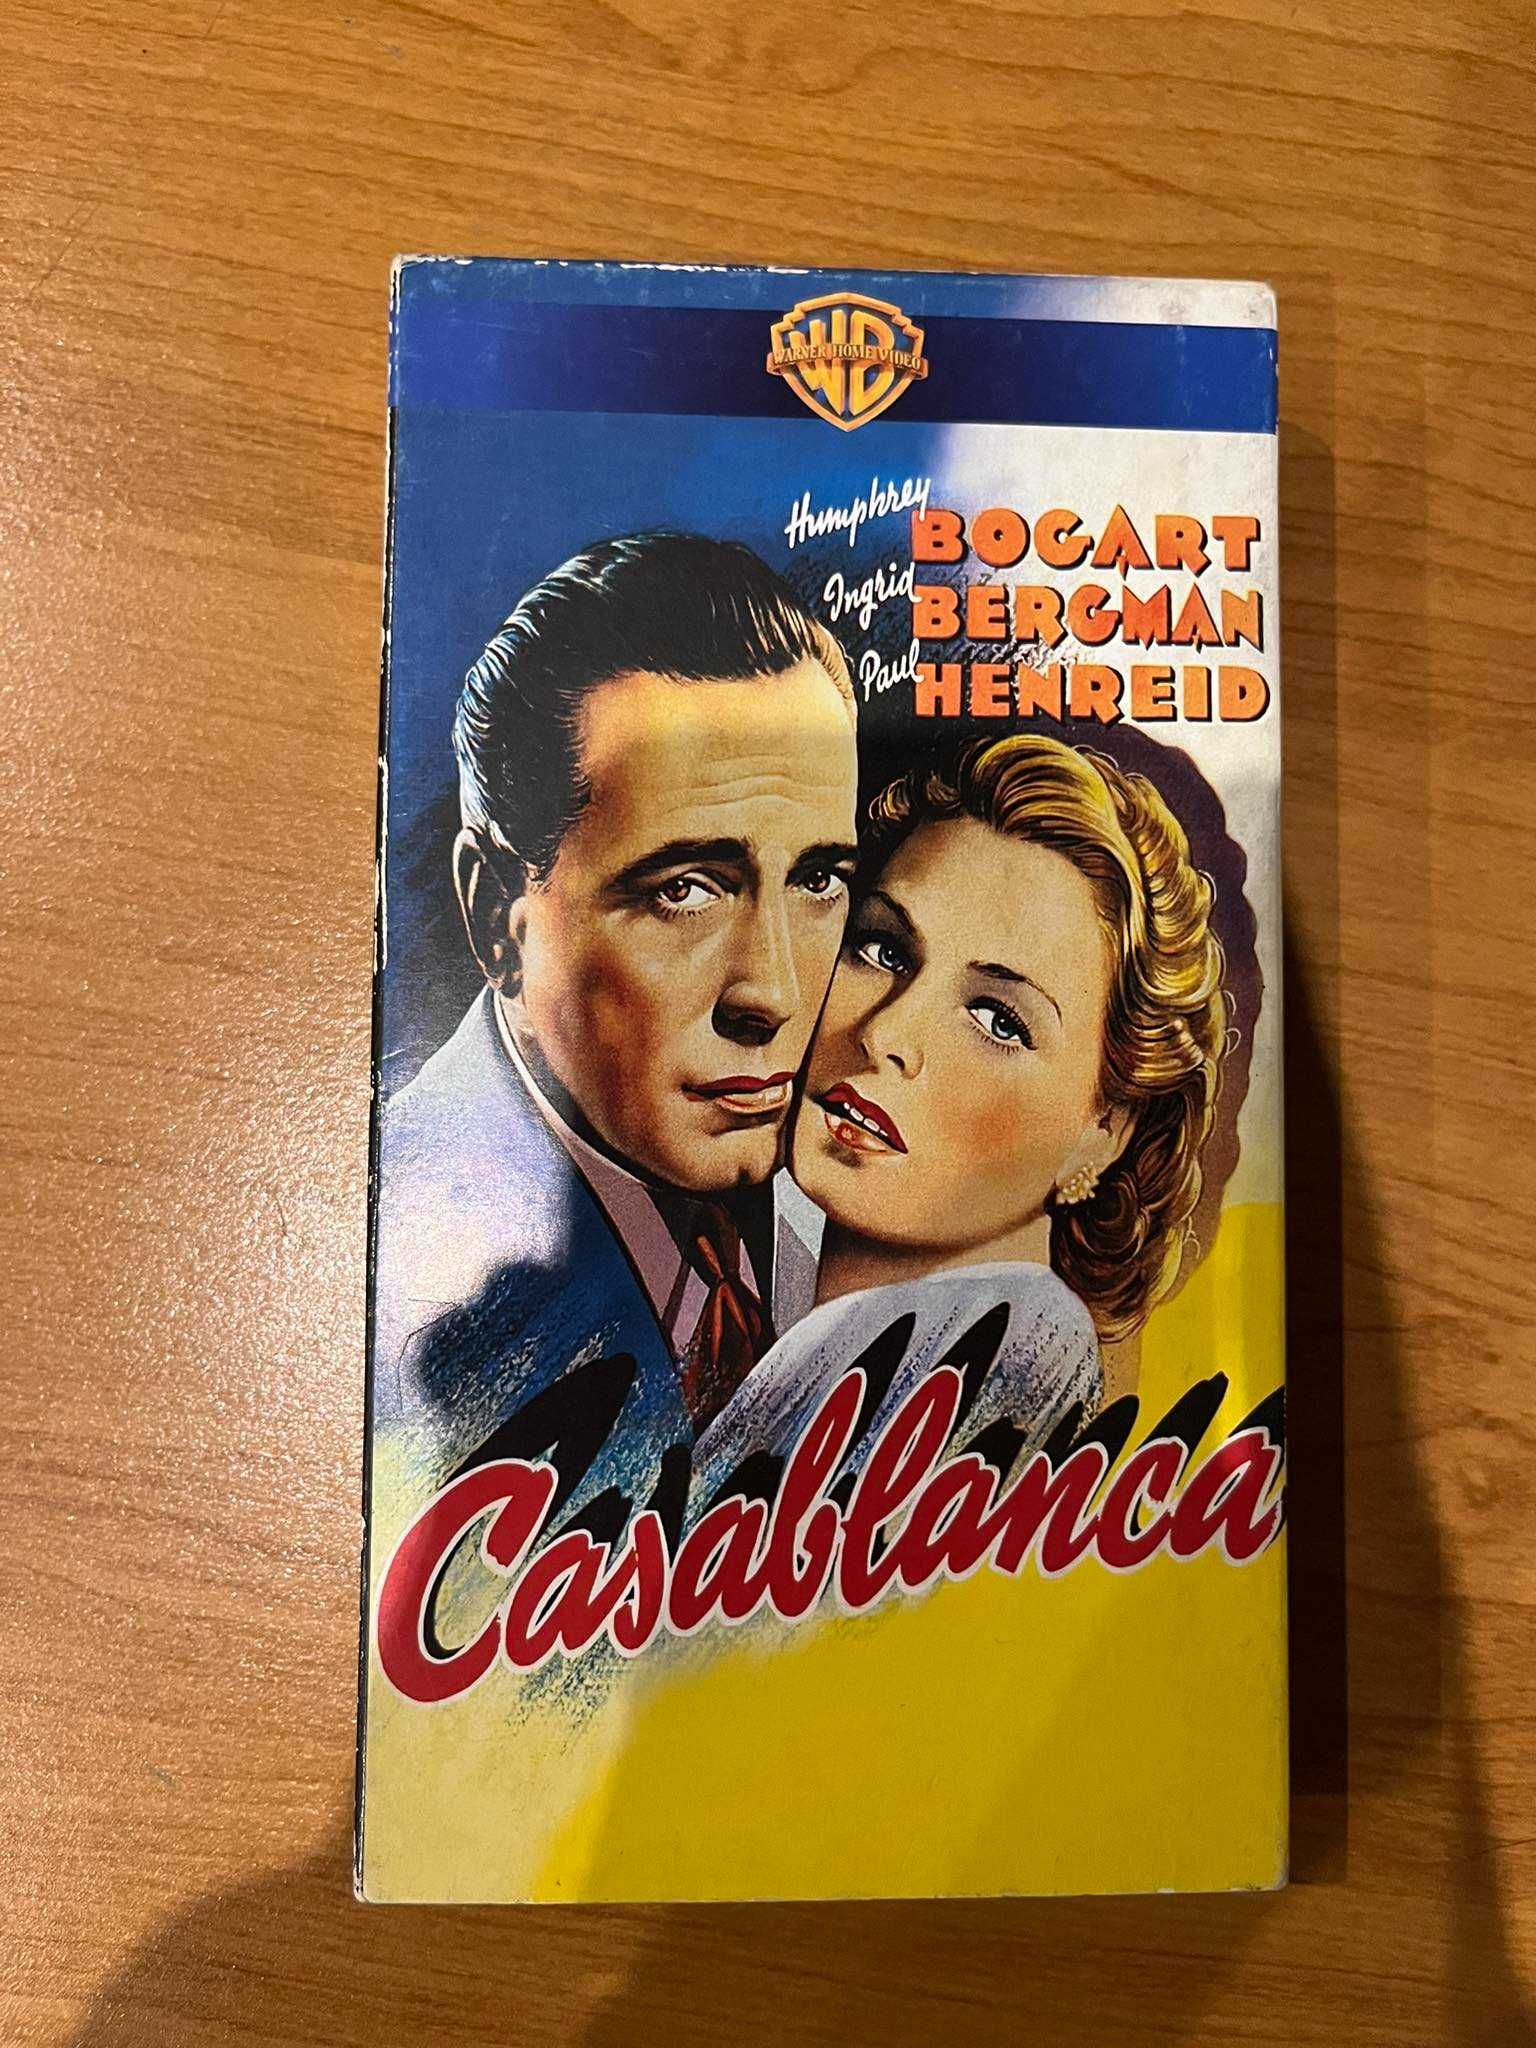 Sprzedam film Casablanca na VHS